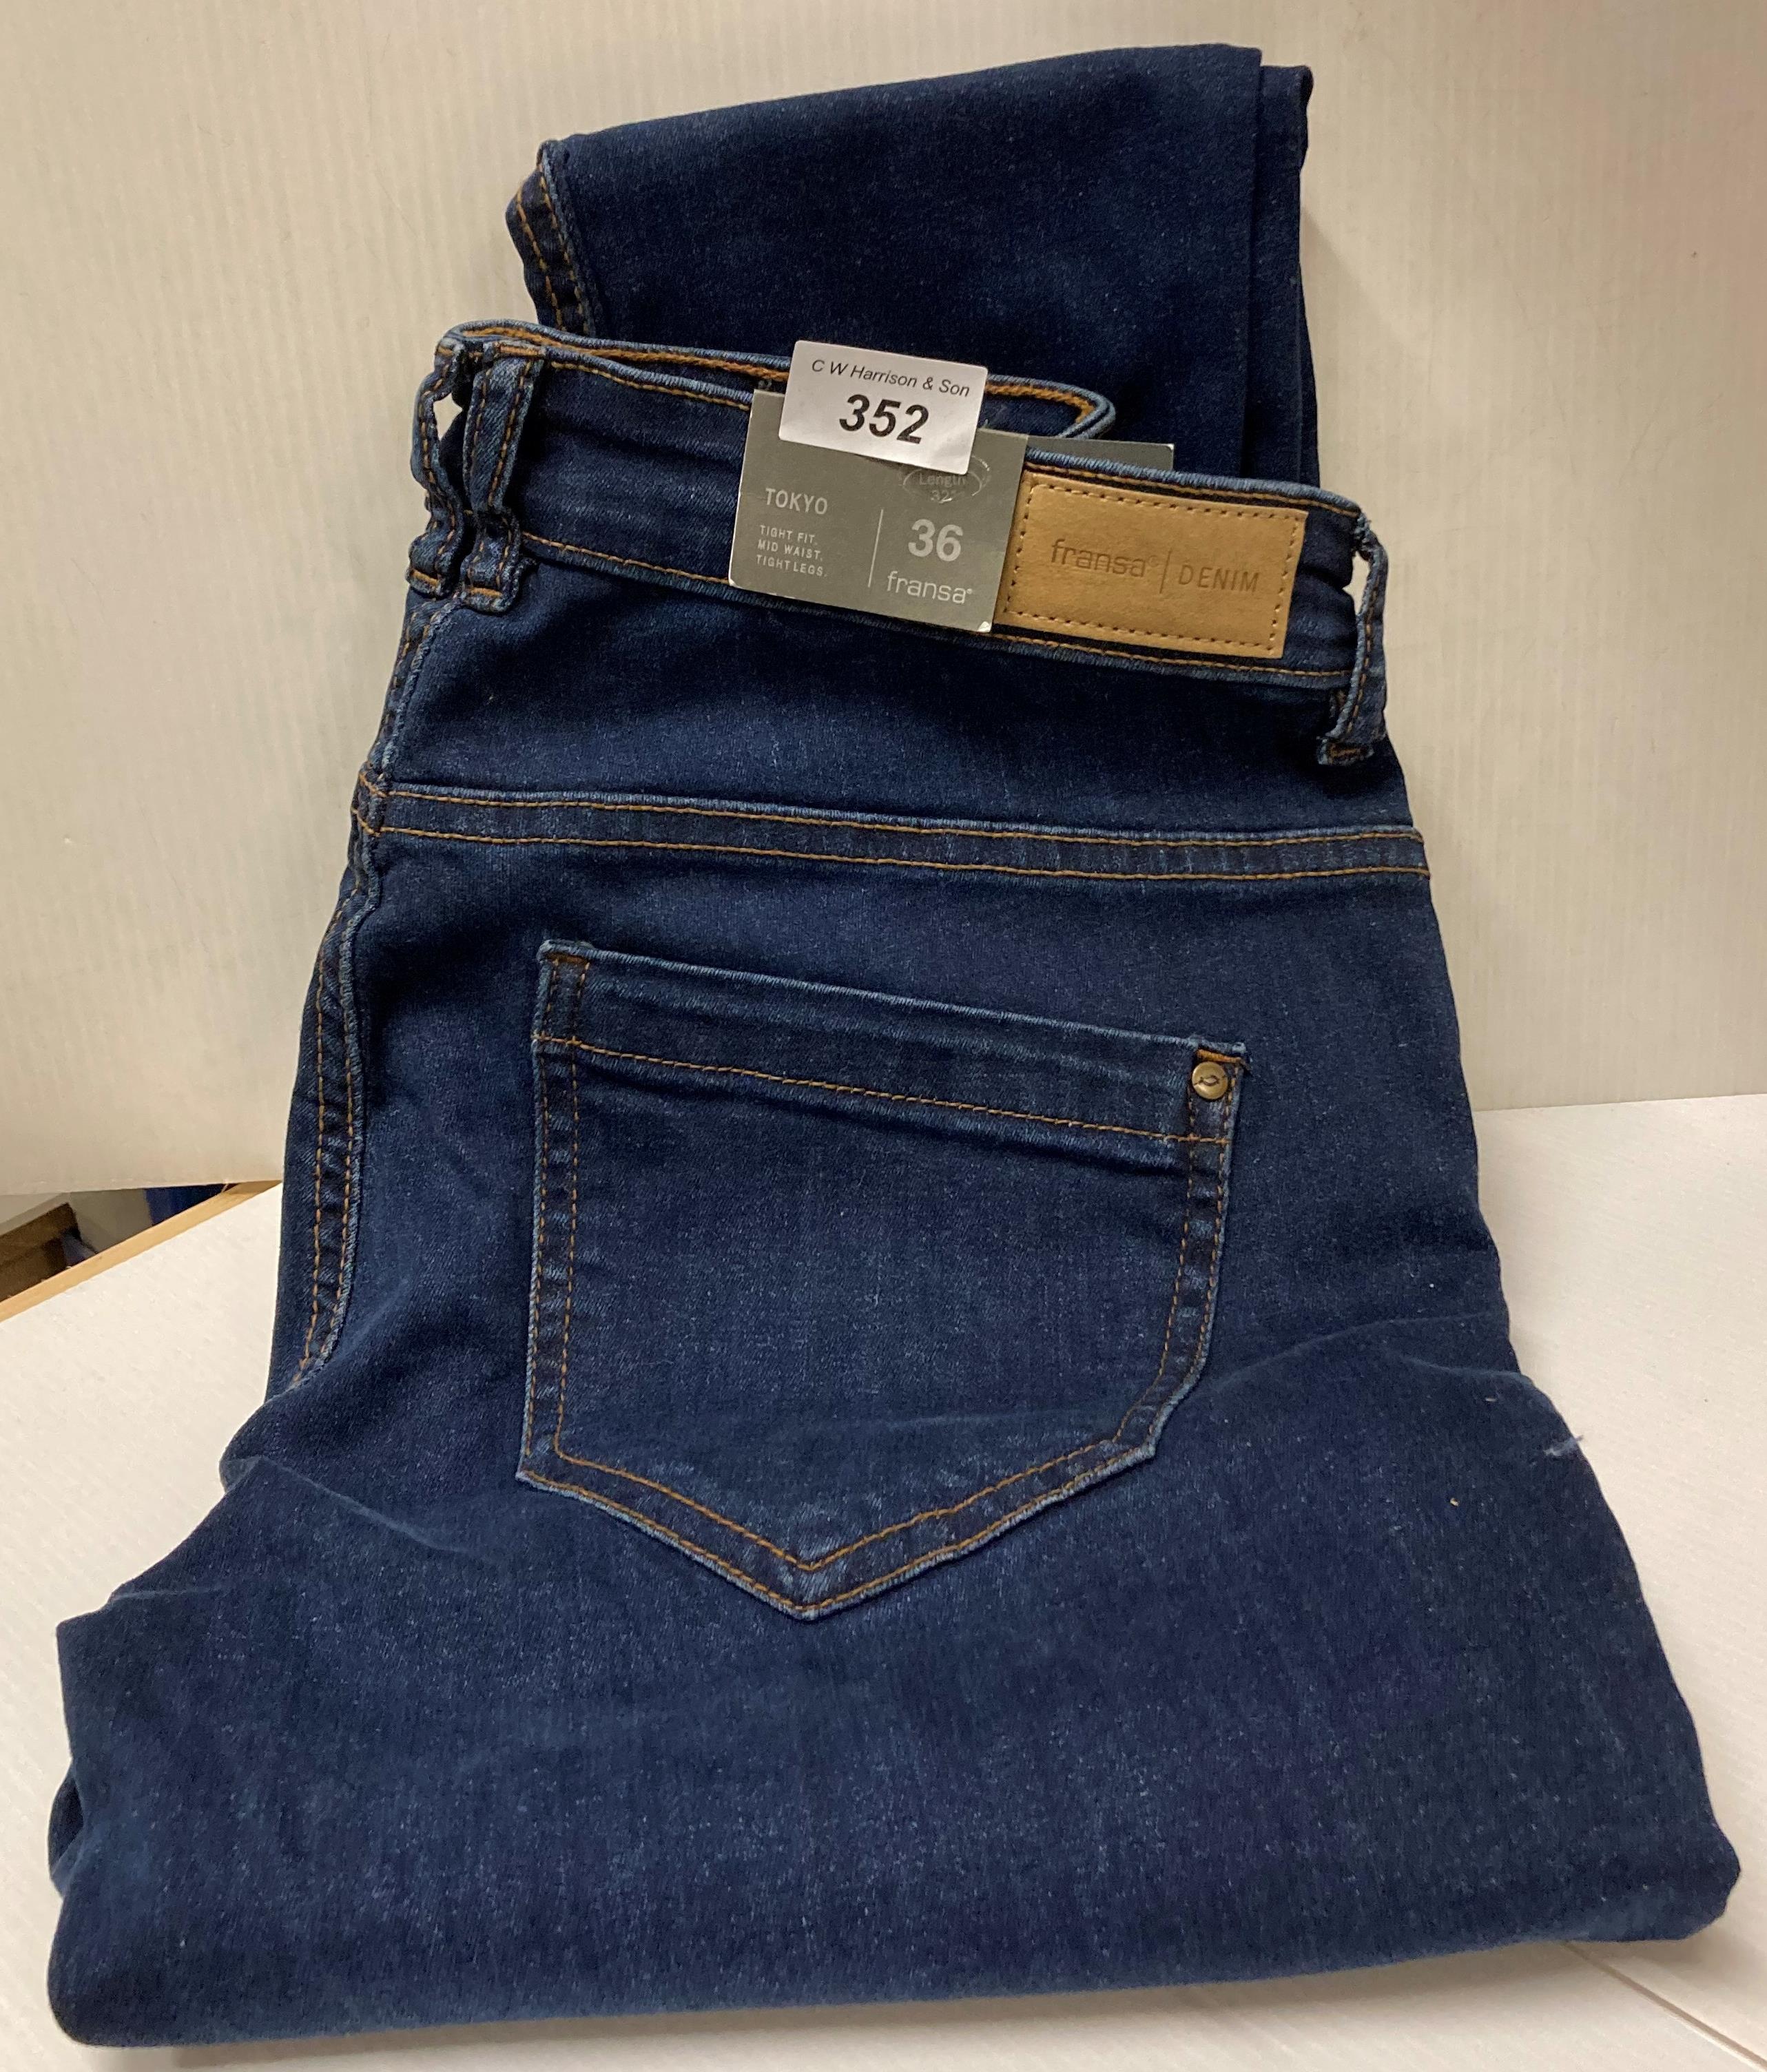 Pair of FRANSA Tokyo dark denim ladies jeans - size 36/32 - RRP: £54.